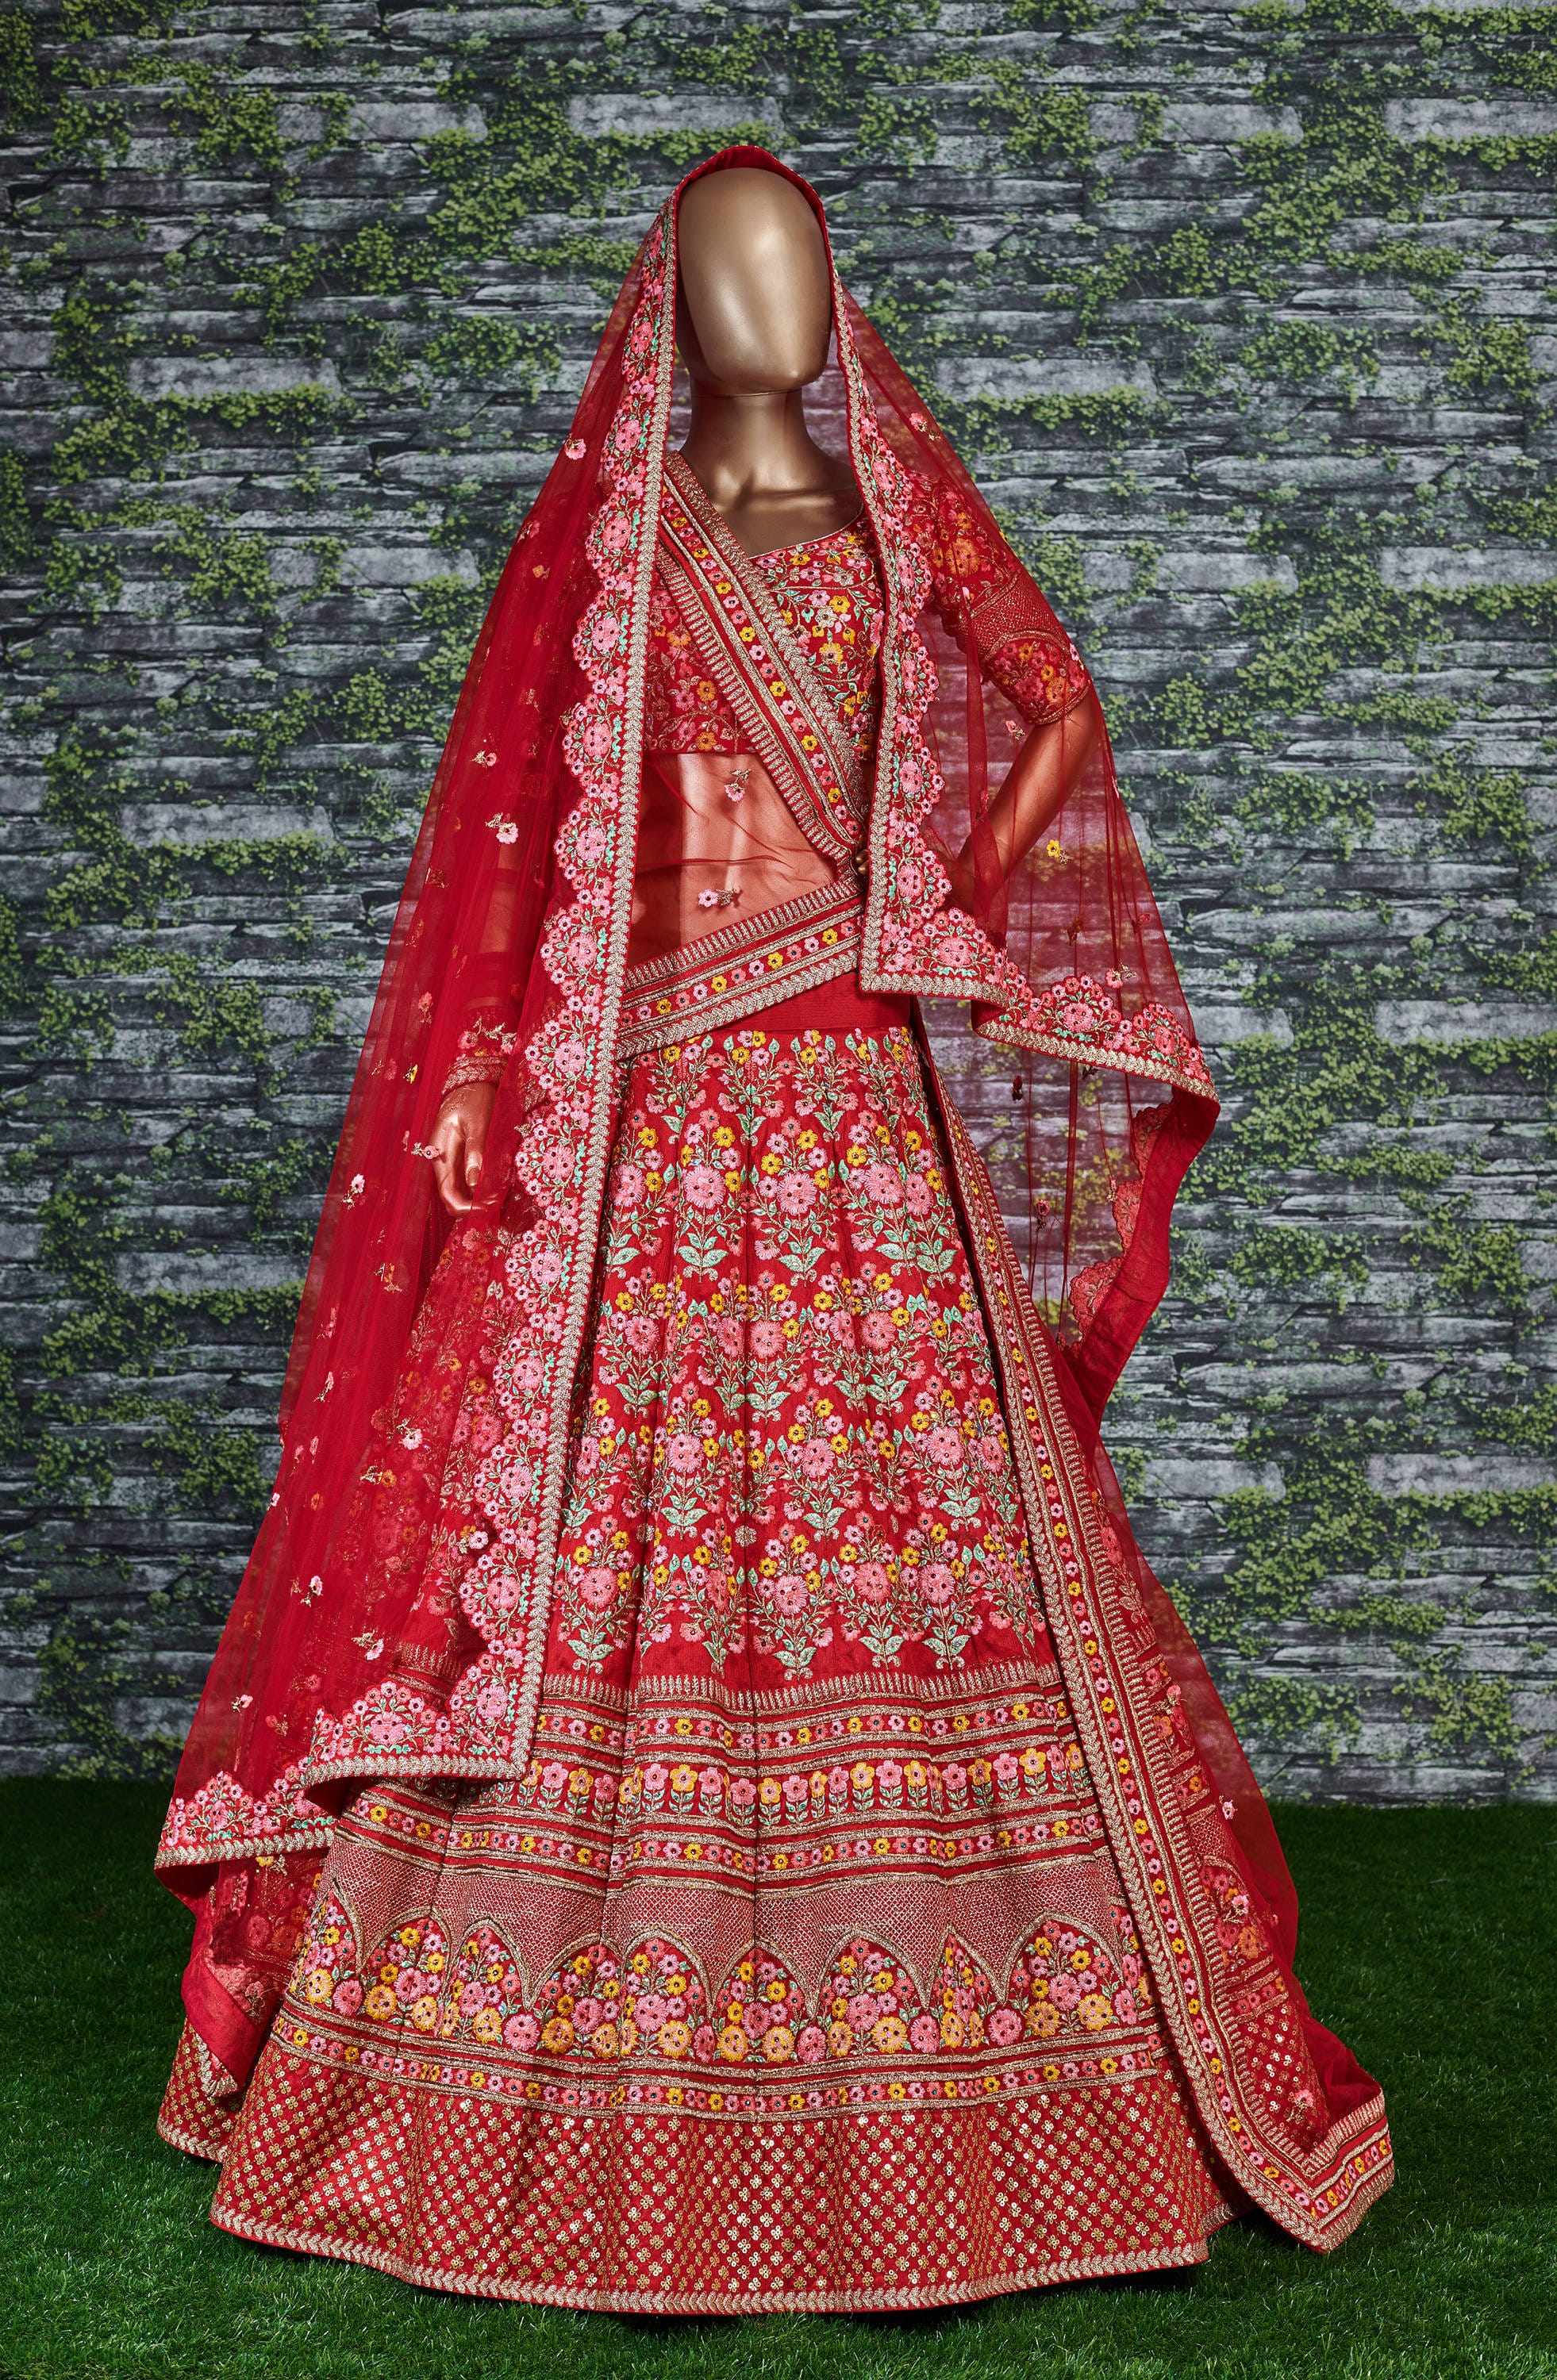 Ruby Elegance: Red Zari Lehenga Choli with Multicolor Embroidery and Stonework